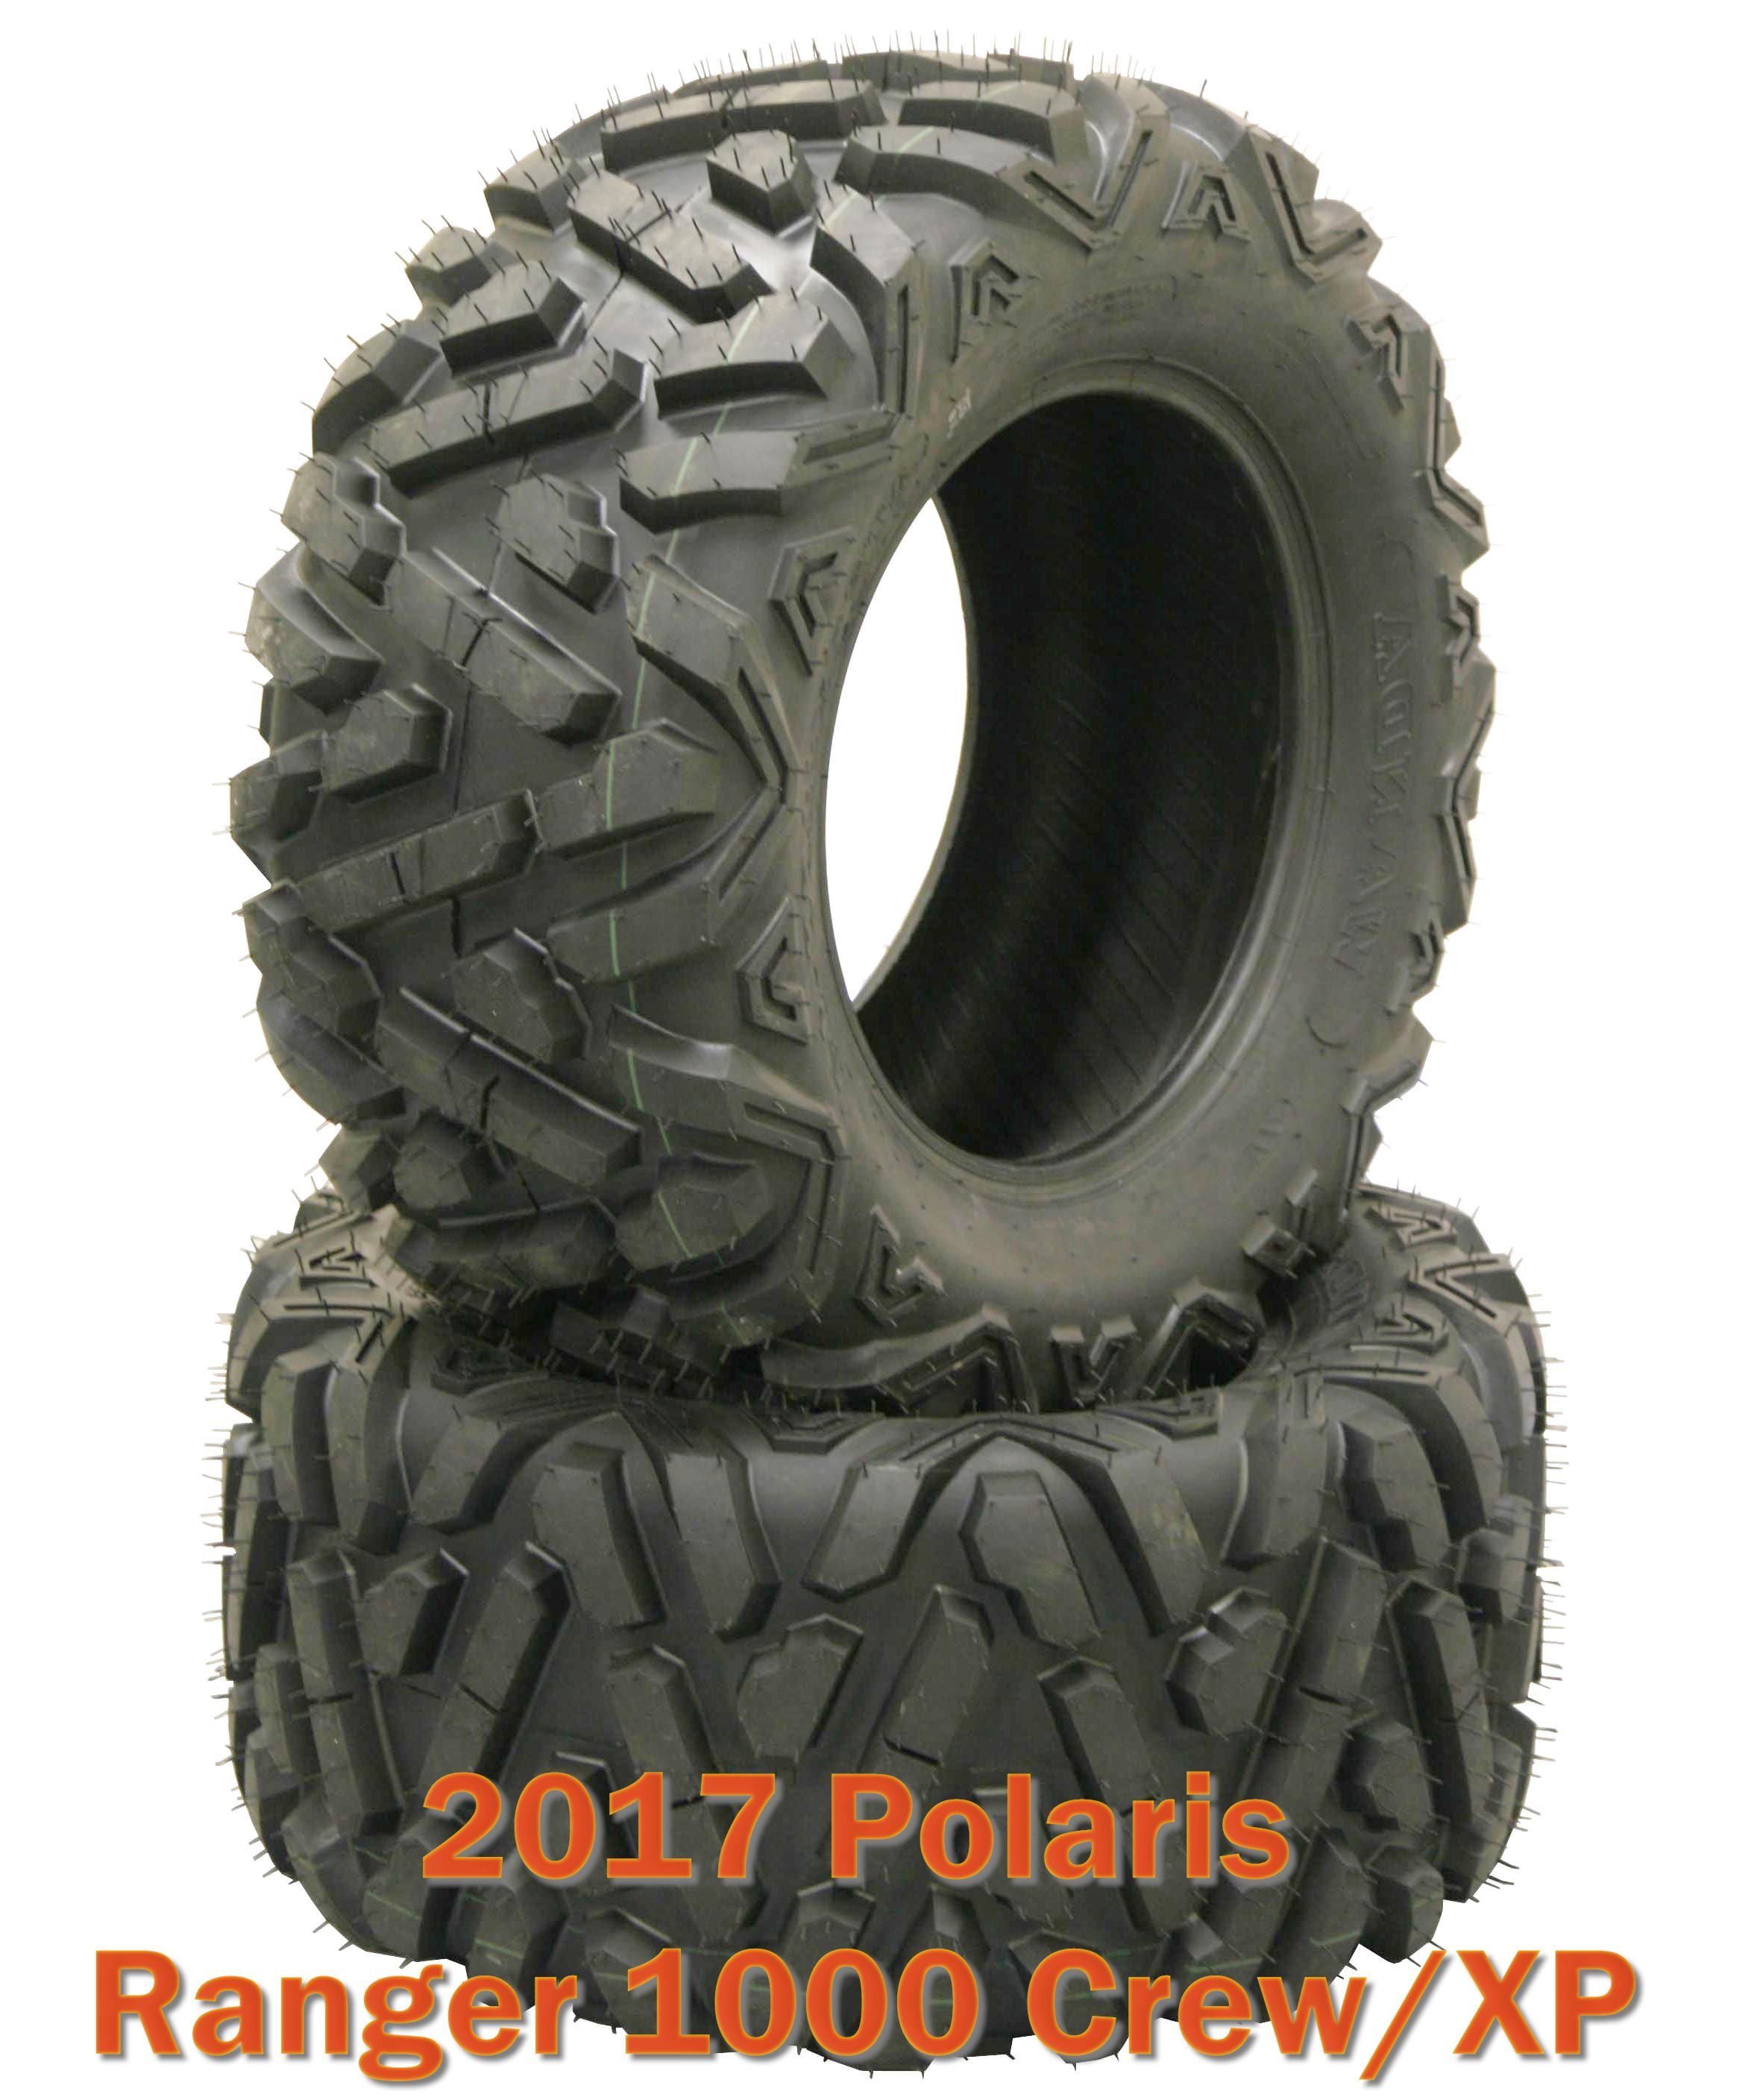 2 26x11R12 Radial ATV Rear Tire Set for 2017 Polaris Ranger 1000 Crew/XP 